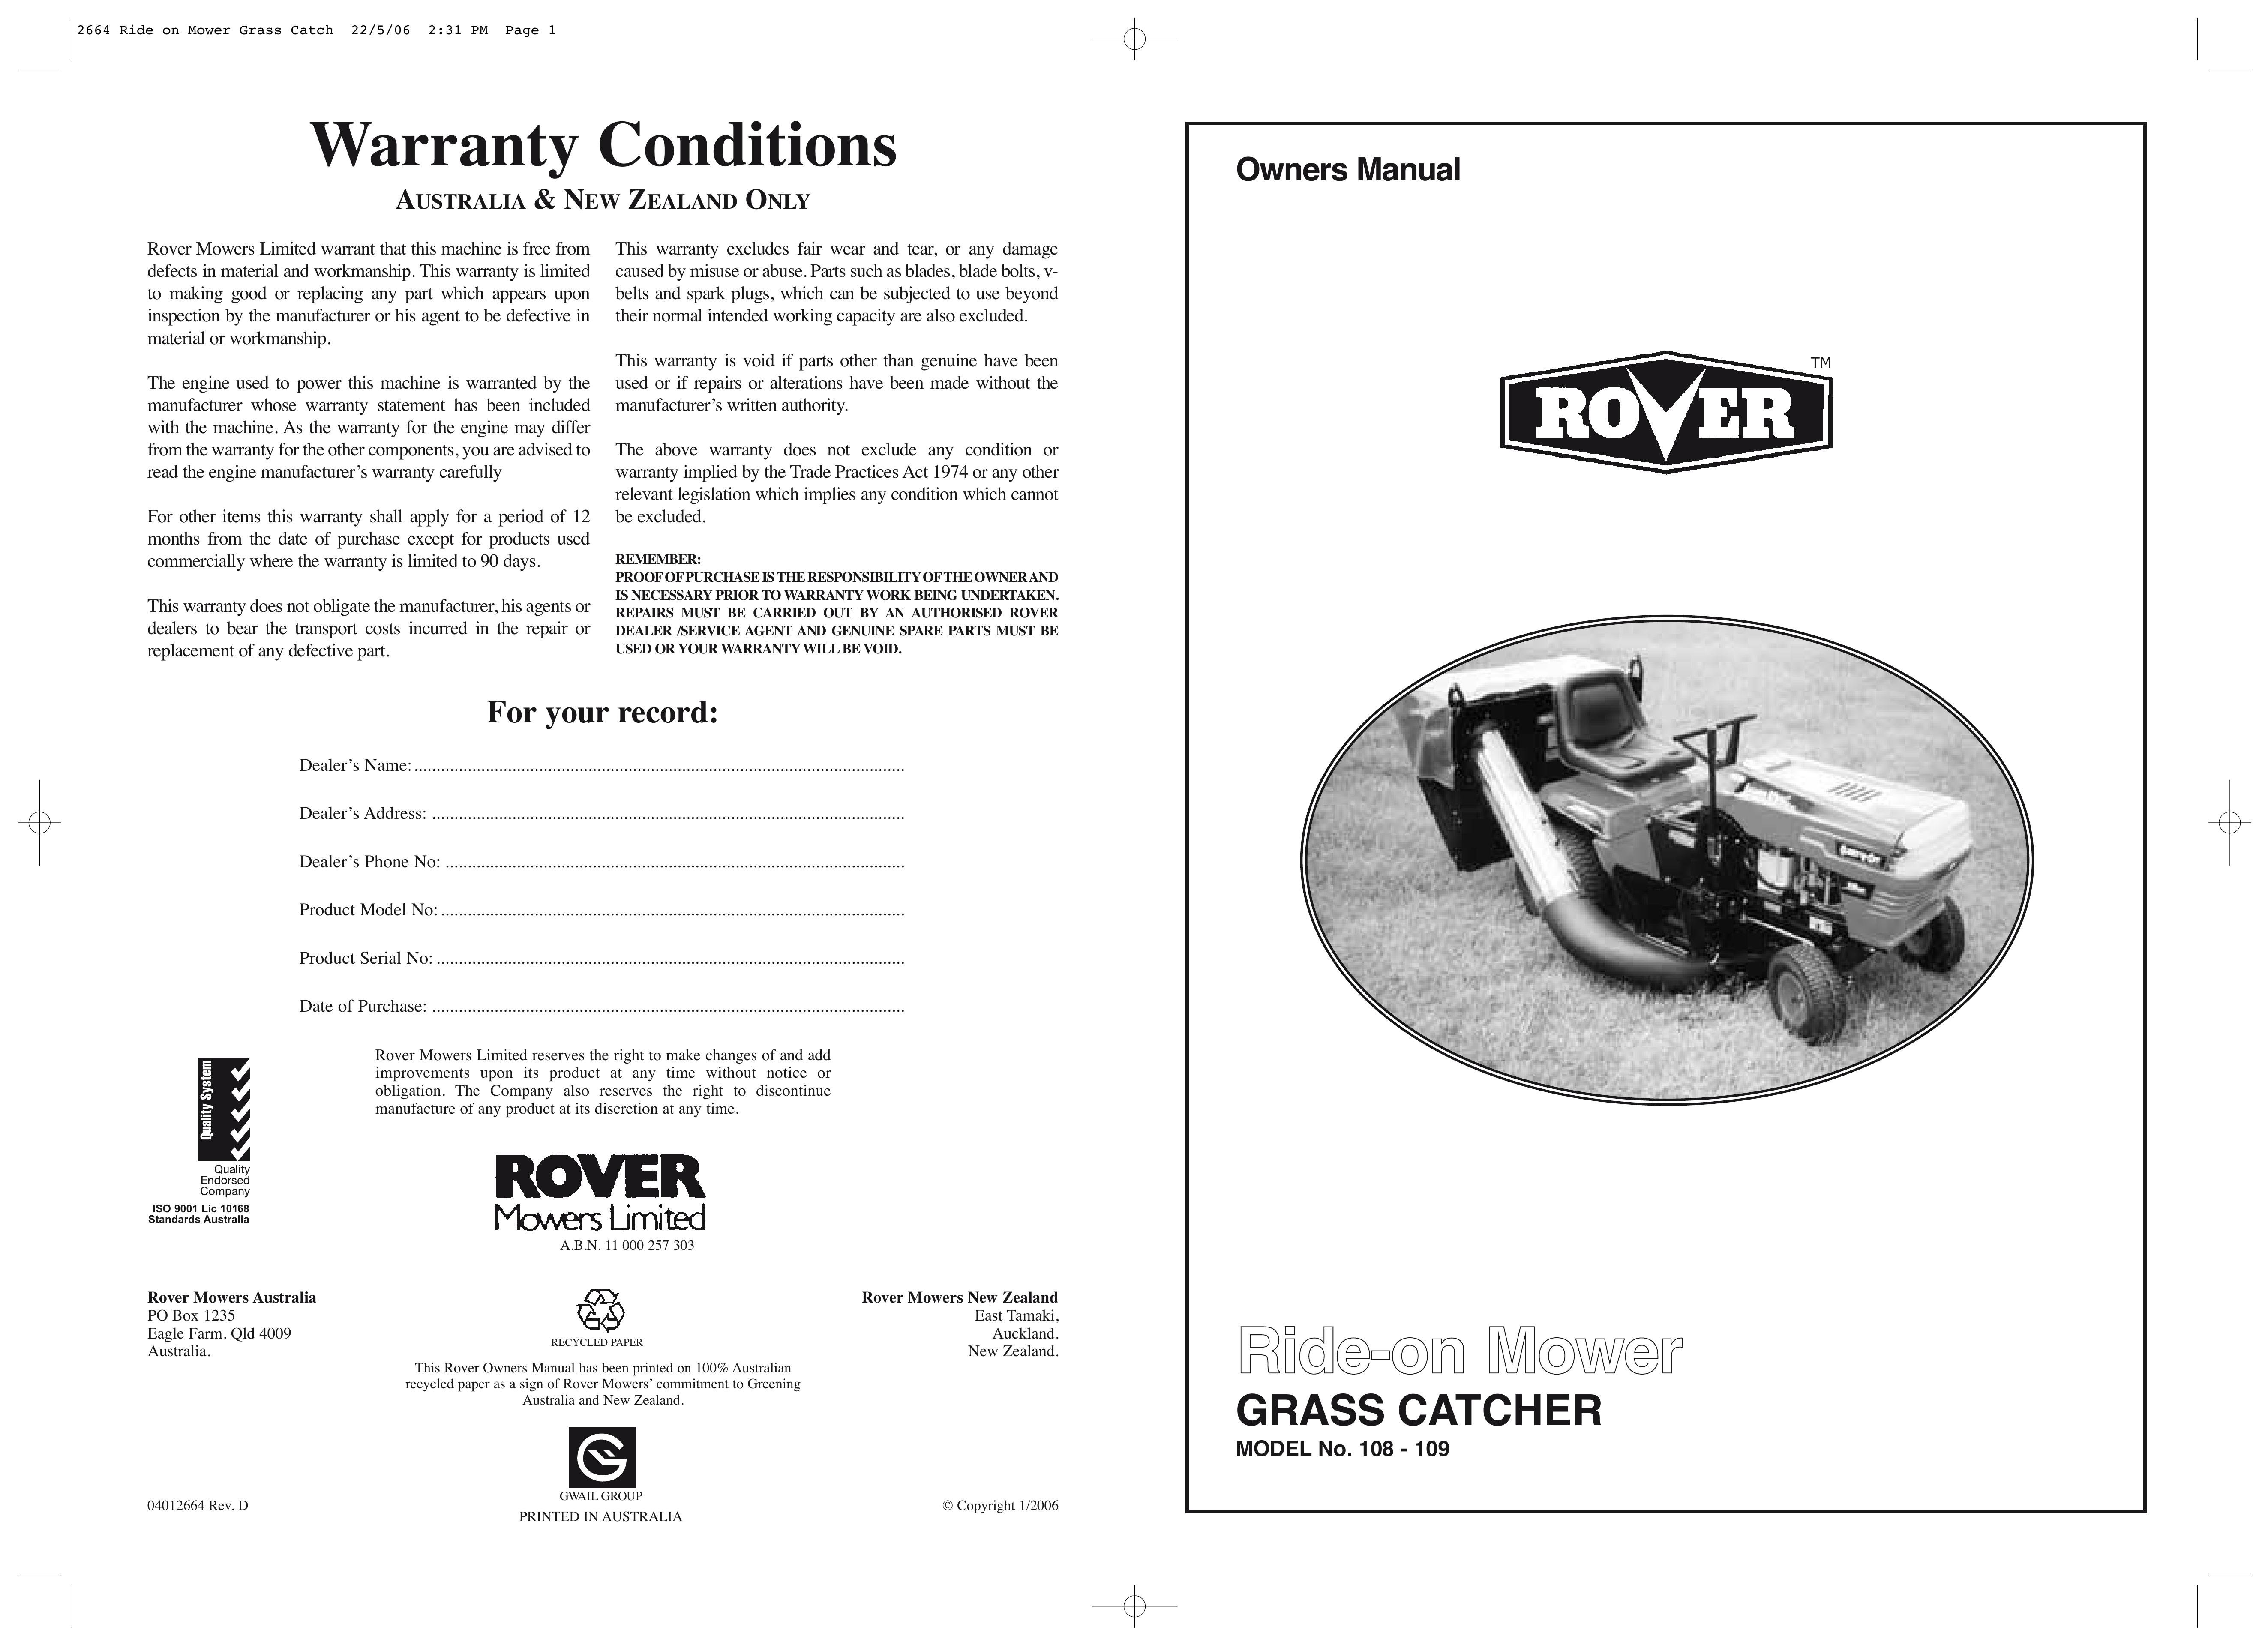 Rover 108, 109 Lawn Mower User Manual